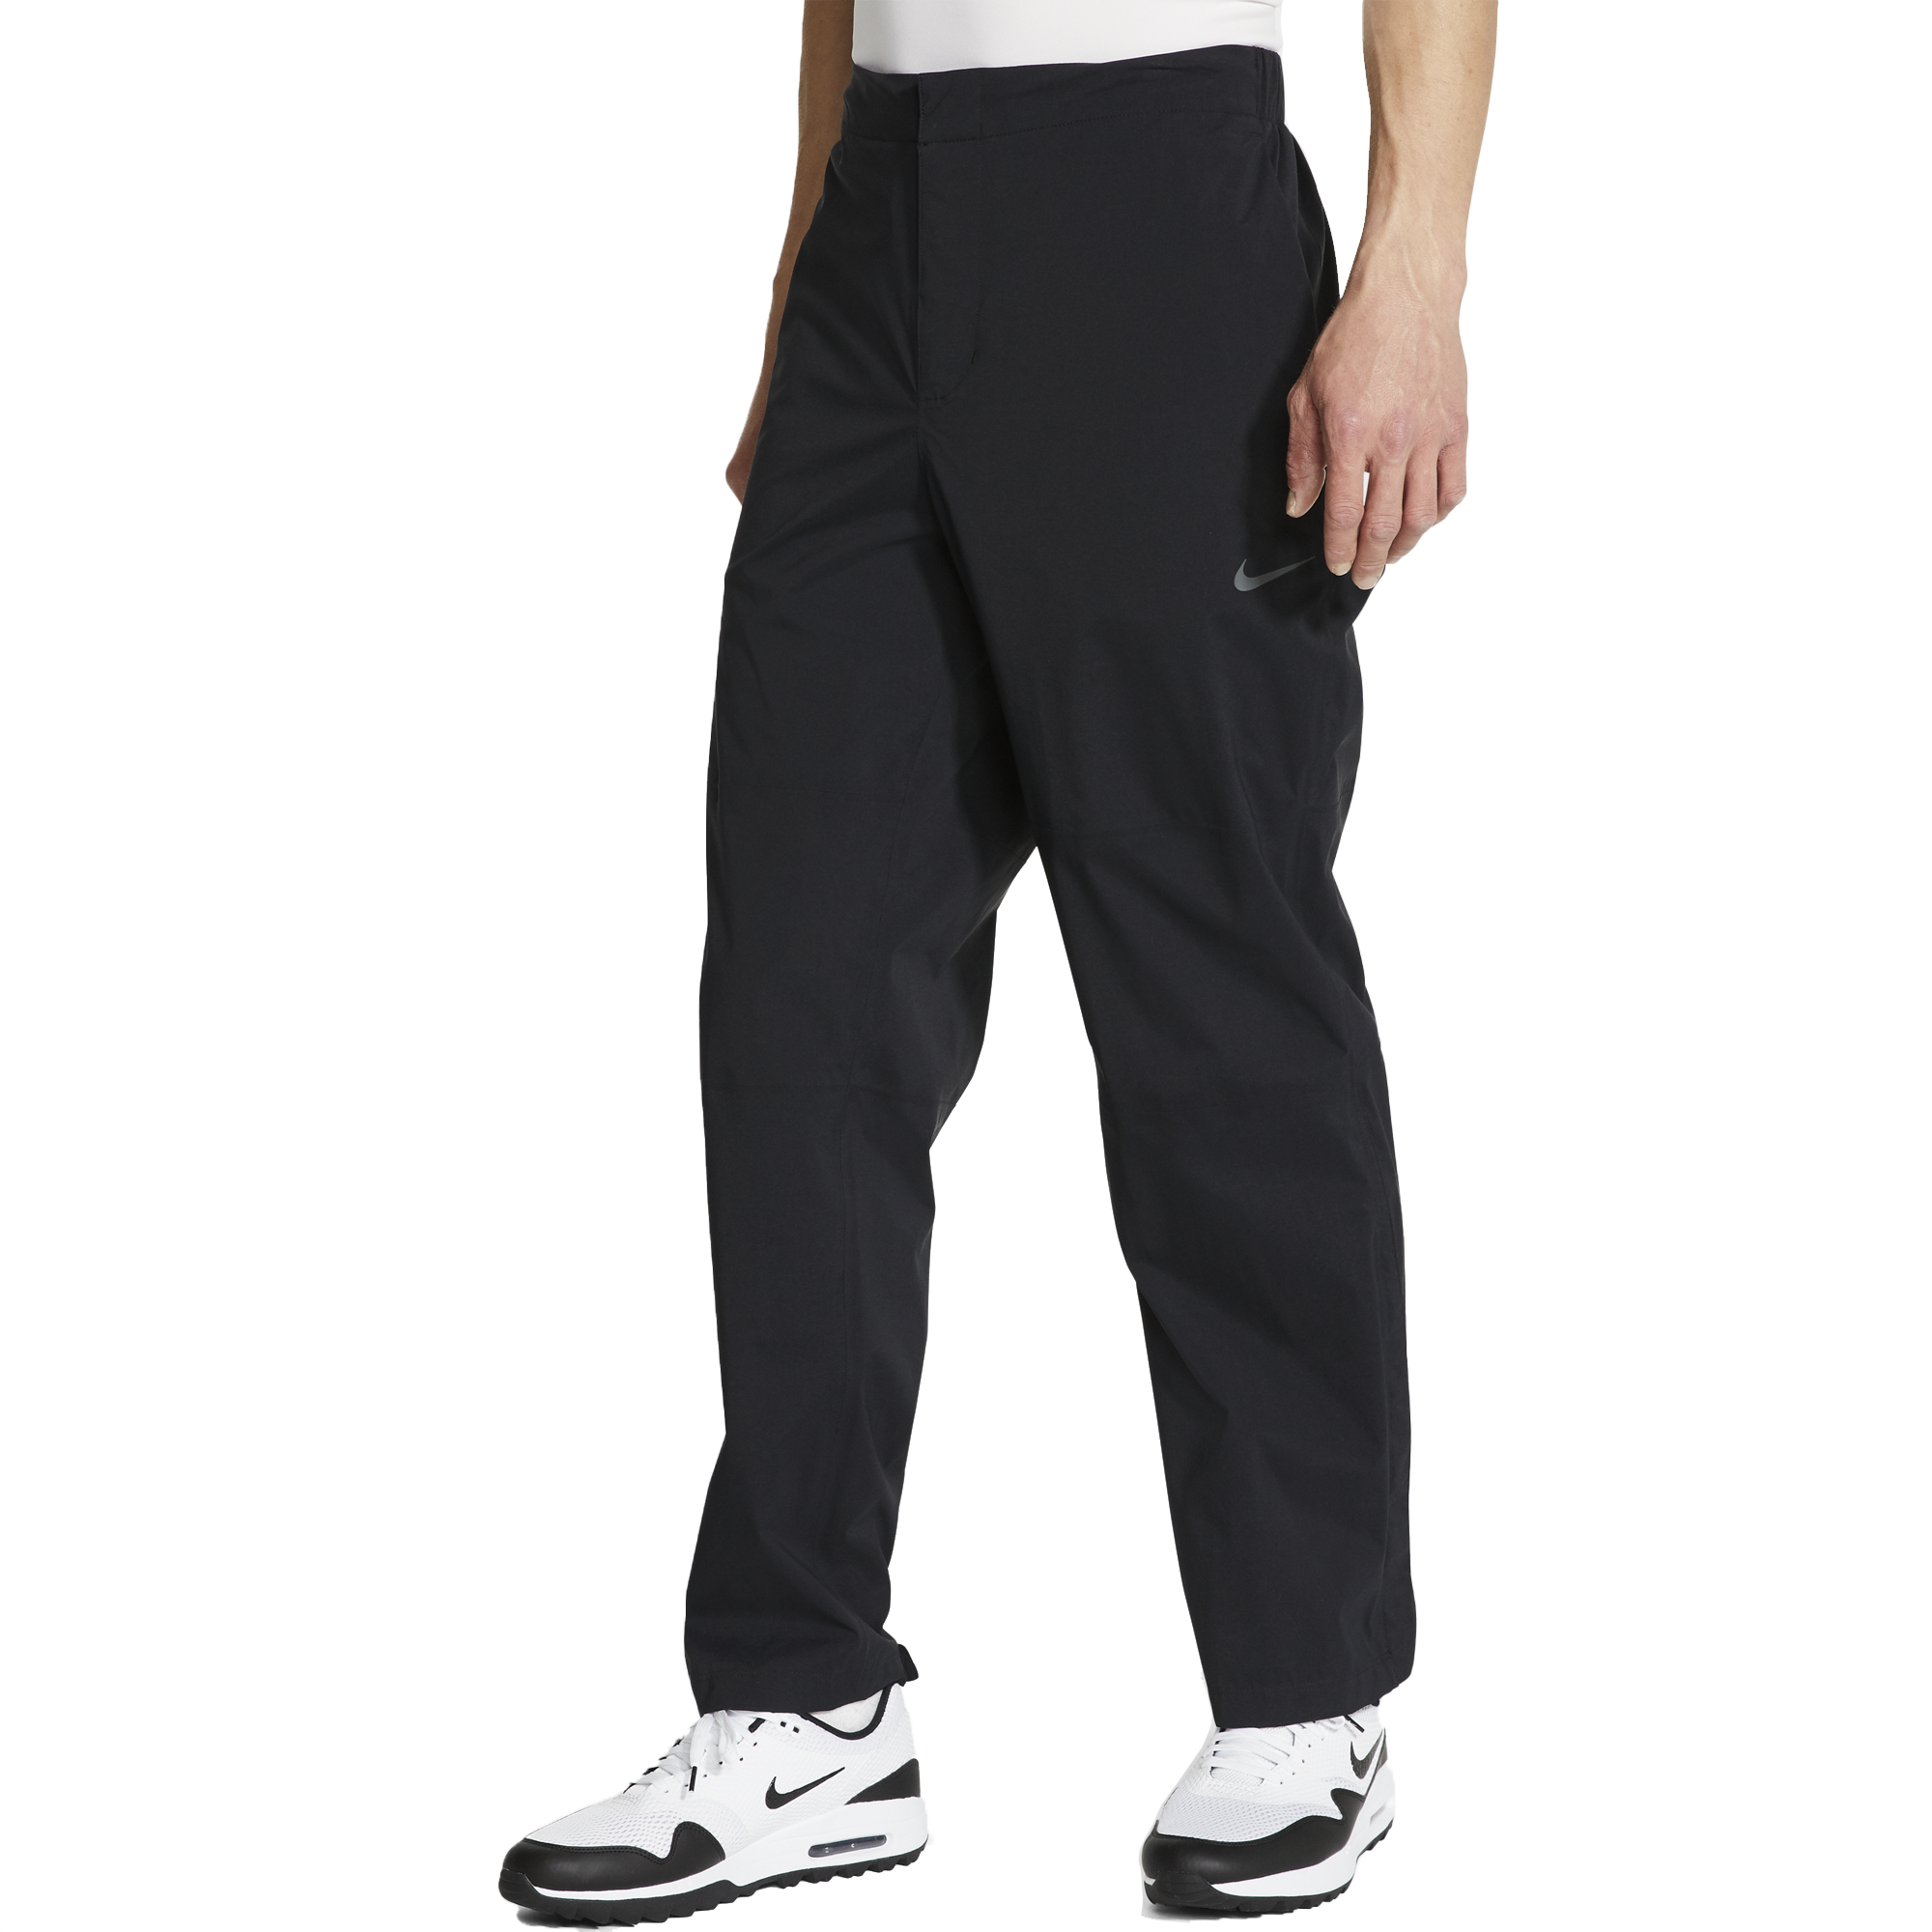 $200 Mens Size XL Nike Hyper Shield Adapt Waterproof Golf Pants Black  CK6066-010 | eBay